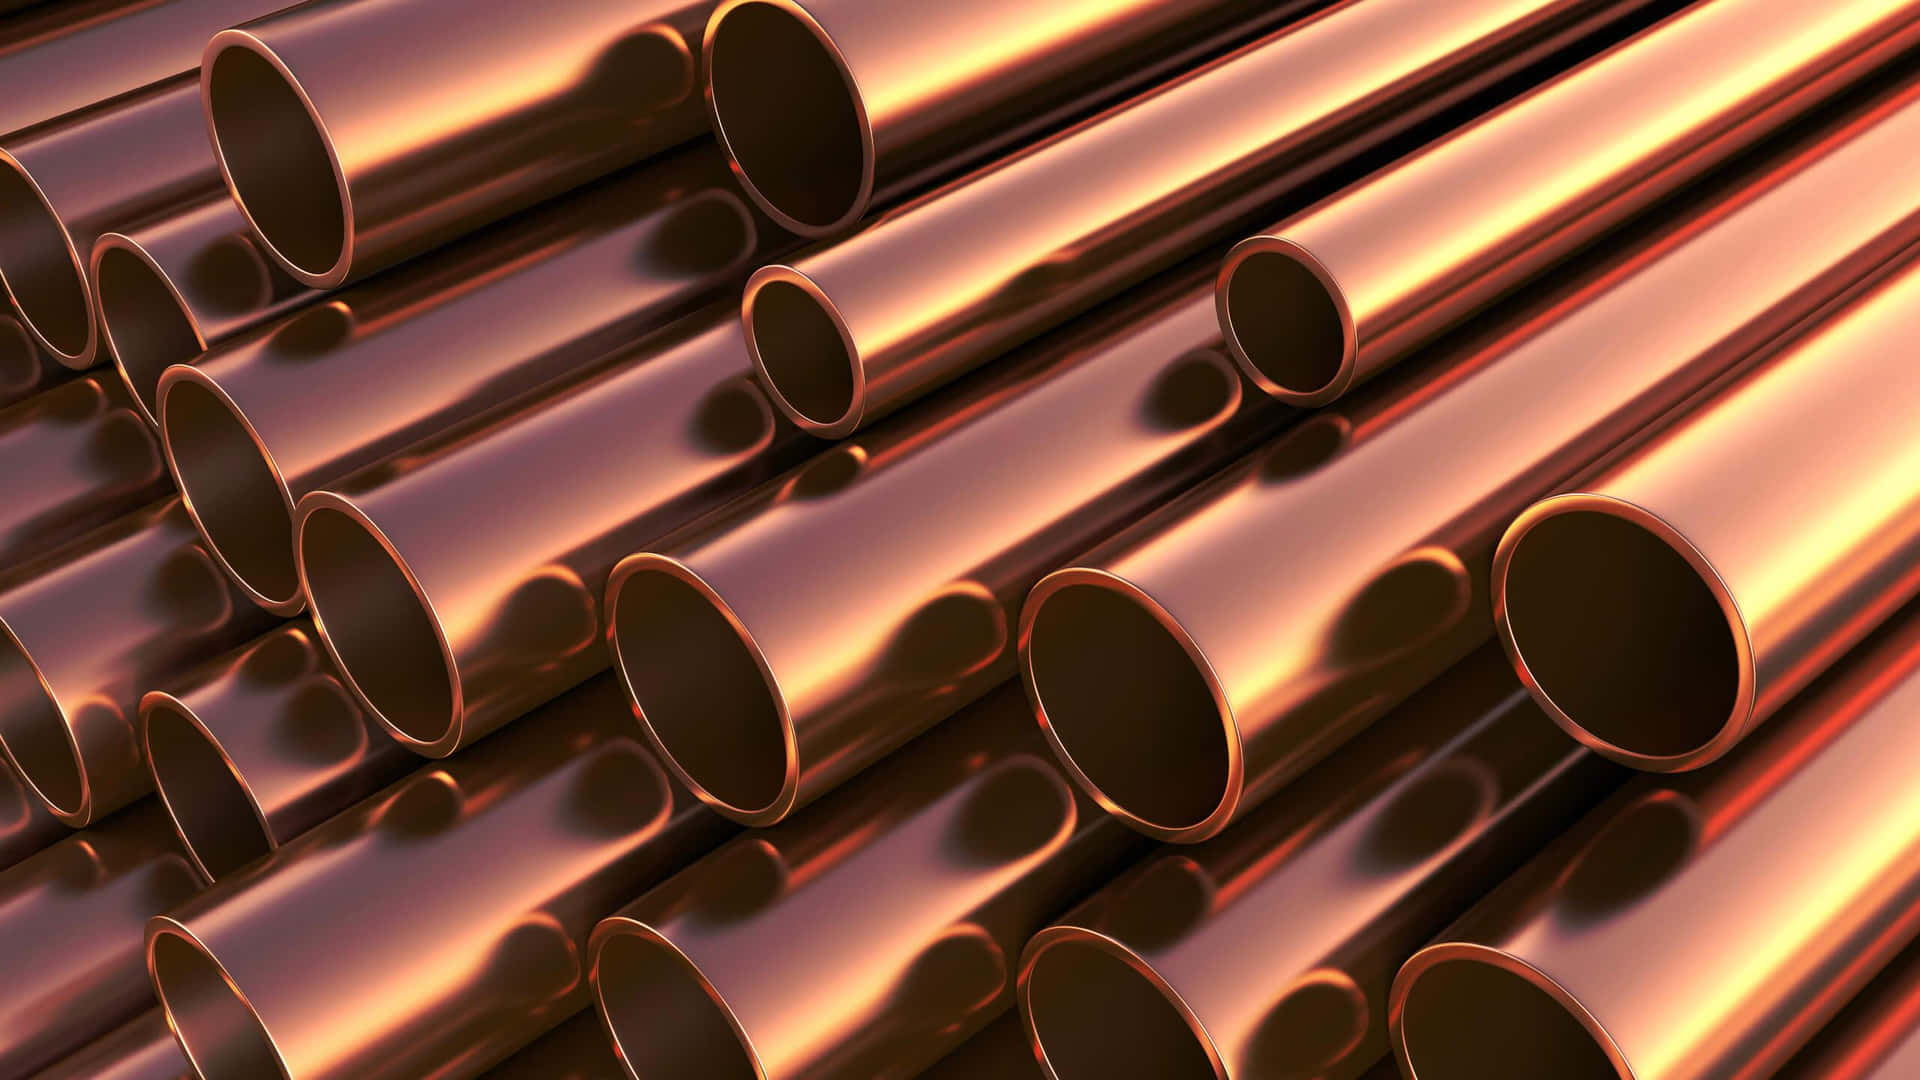 Copper Pipes Texture Wallpaper